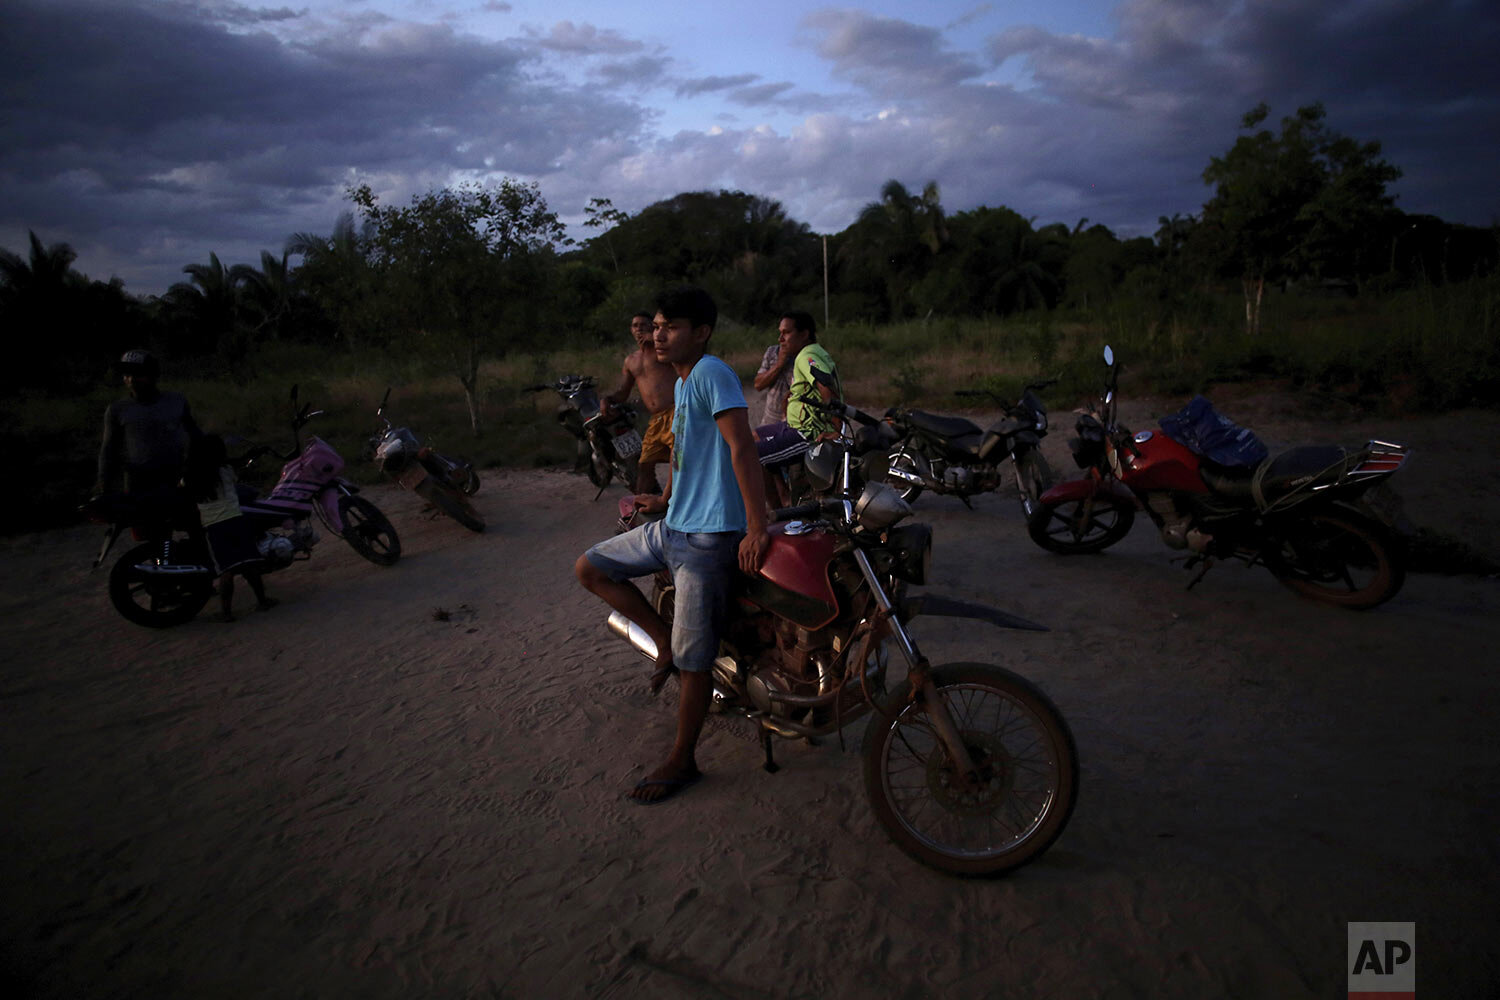  Tenetehara Indigenous men gather with their motorcycles at dusk in the Alto Rio Guama Indigenous Territory, near Paragominas, in the northern Brazilian state of Para, Monday, Sept. 7, 2020. (AP Photo/Eraldo Peres) 